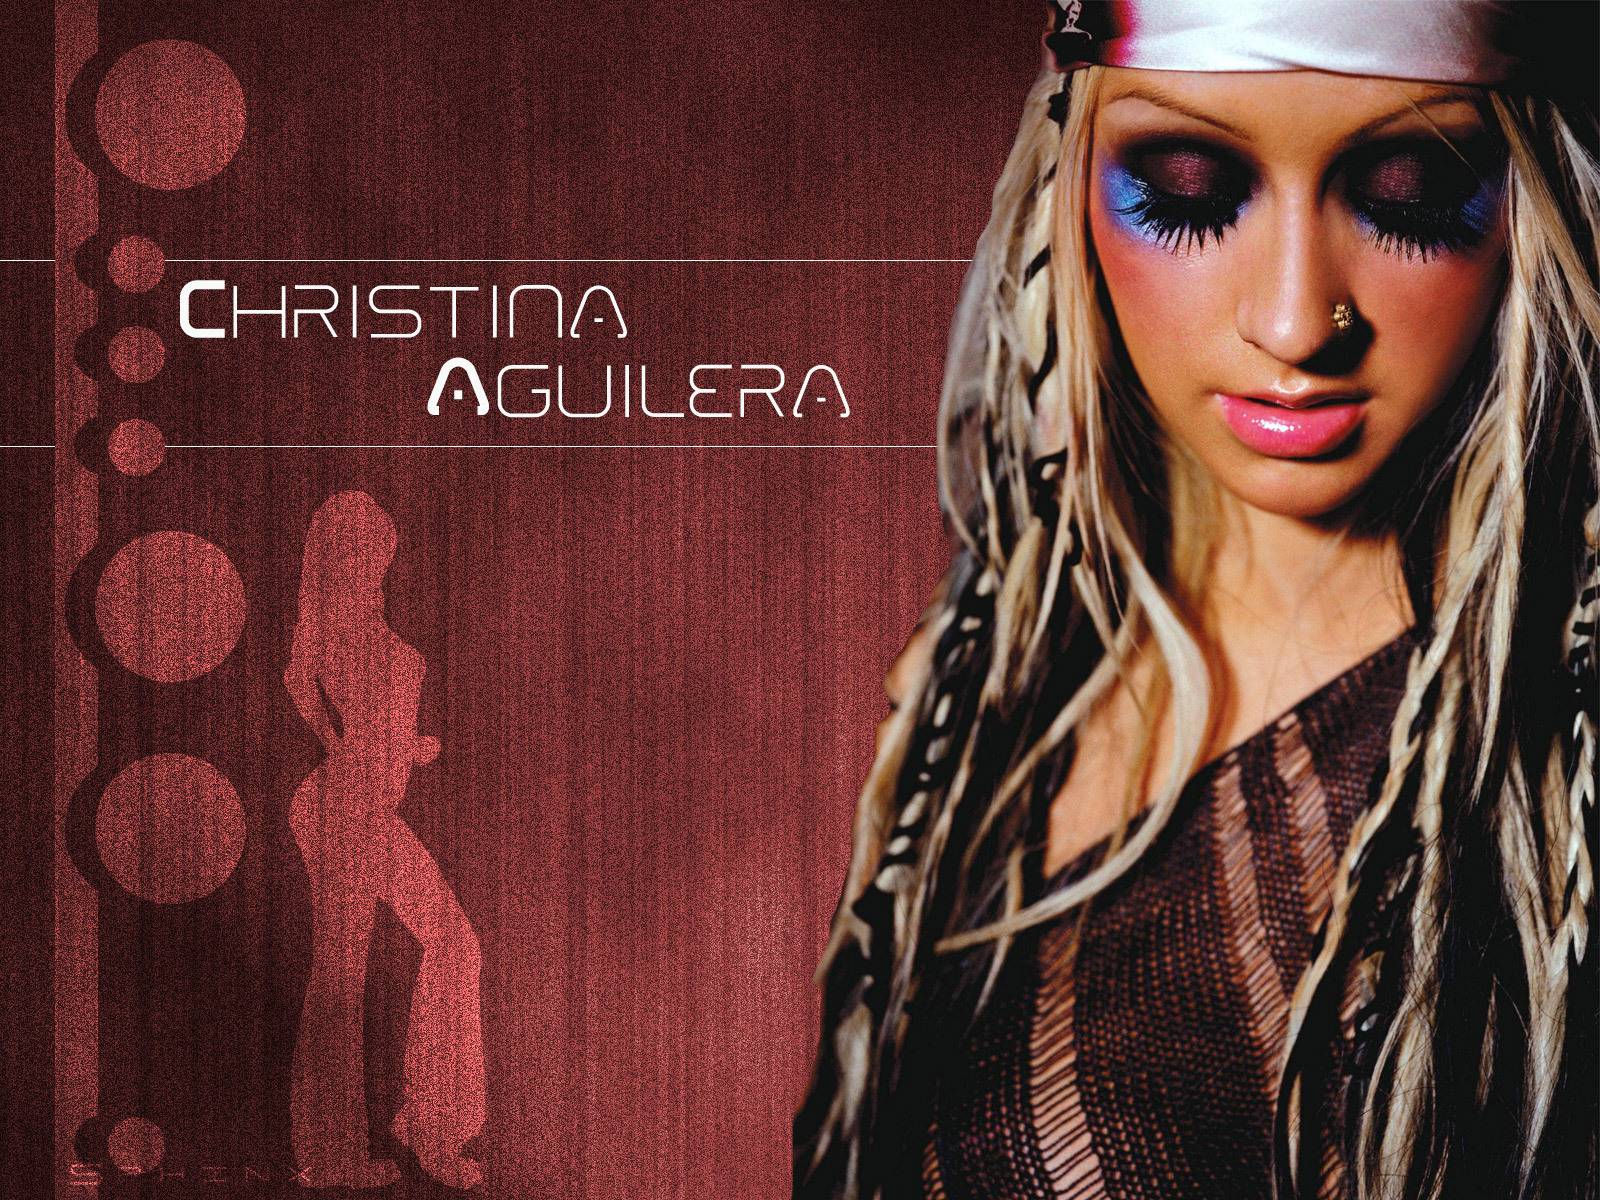 Christina wallpaper Aguilera Wallpaper 11003037